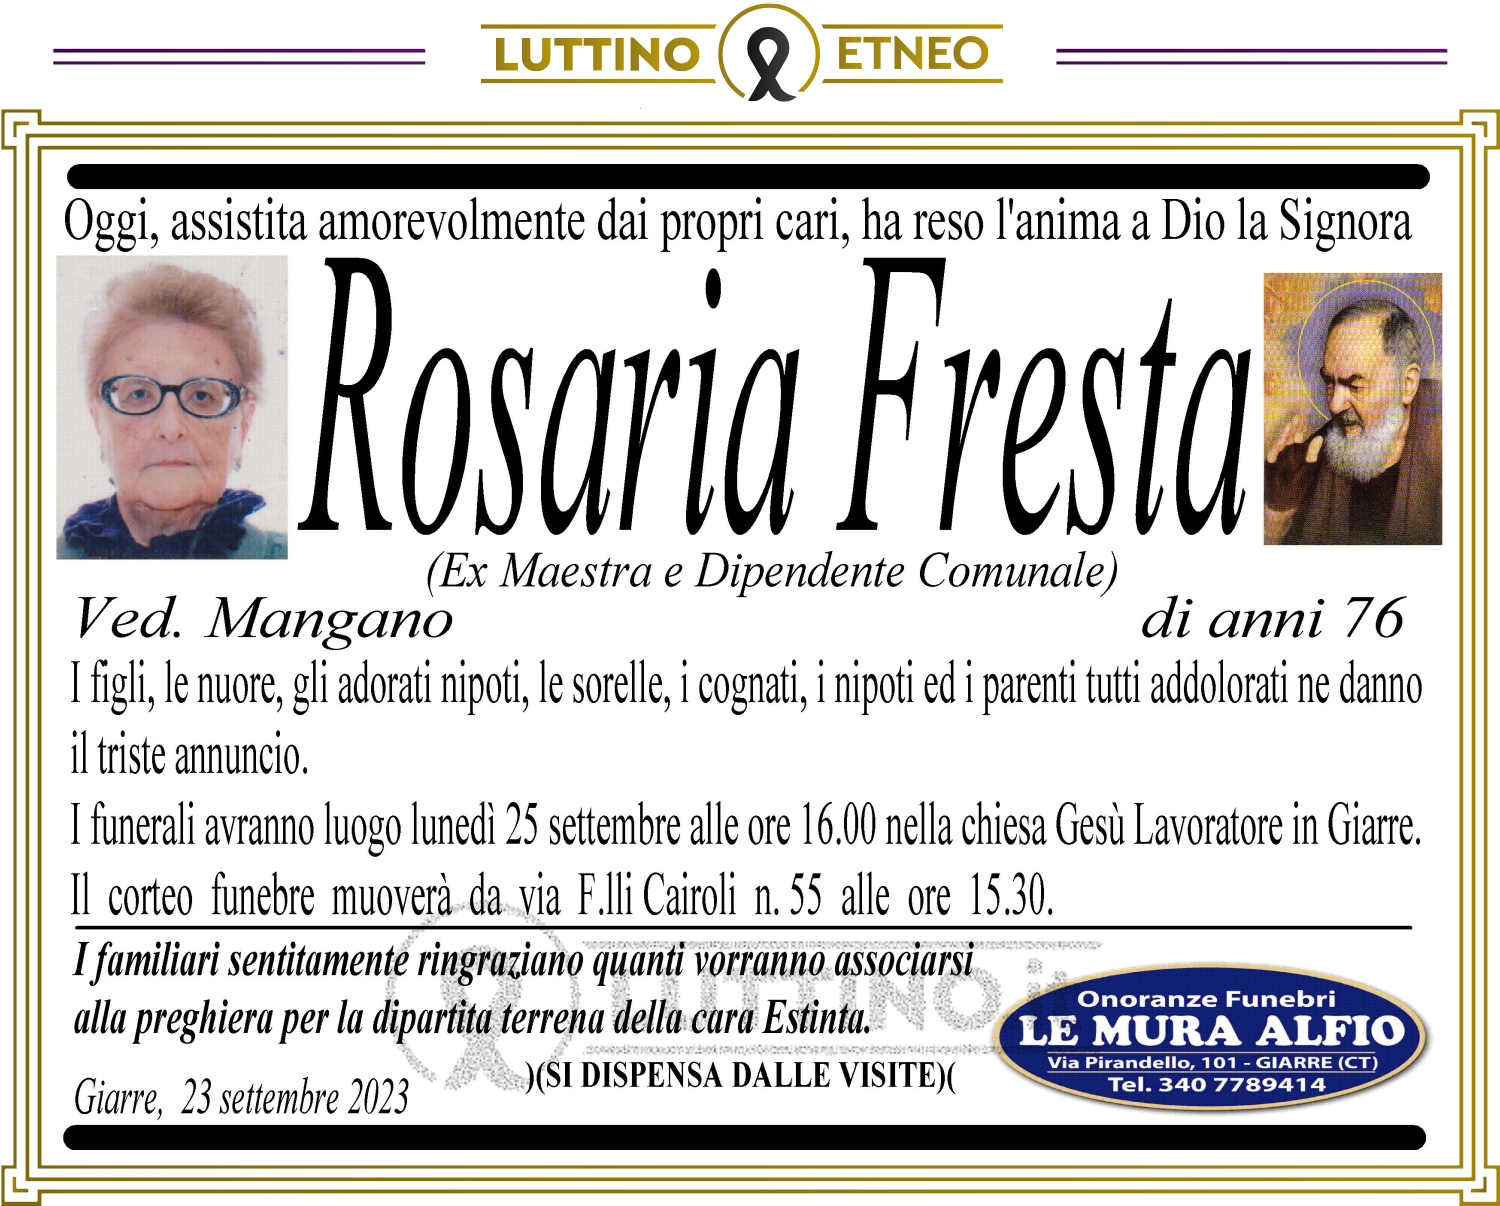 Rosaria Fresta